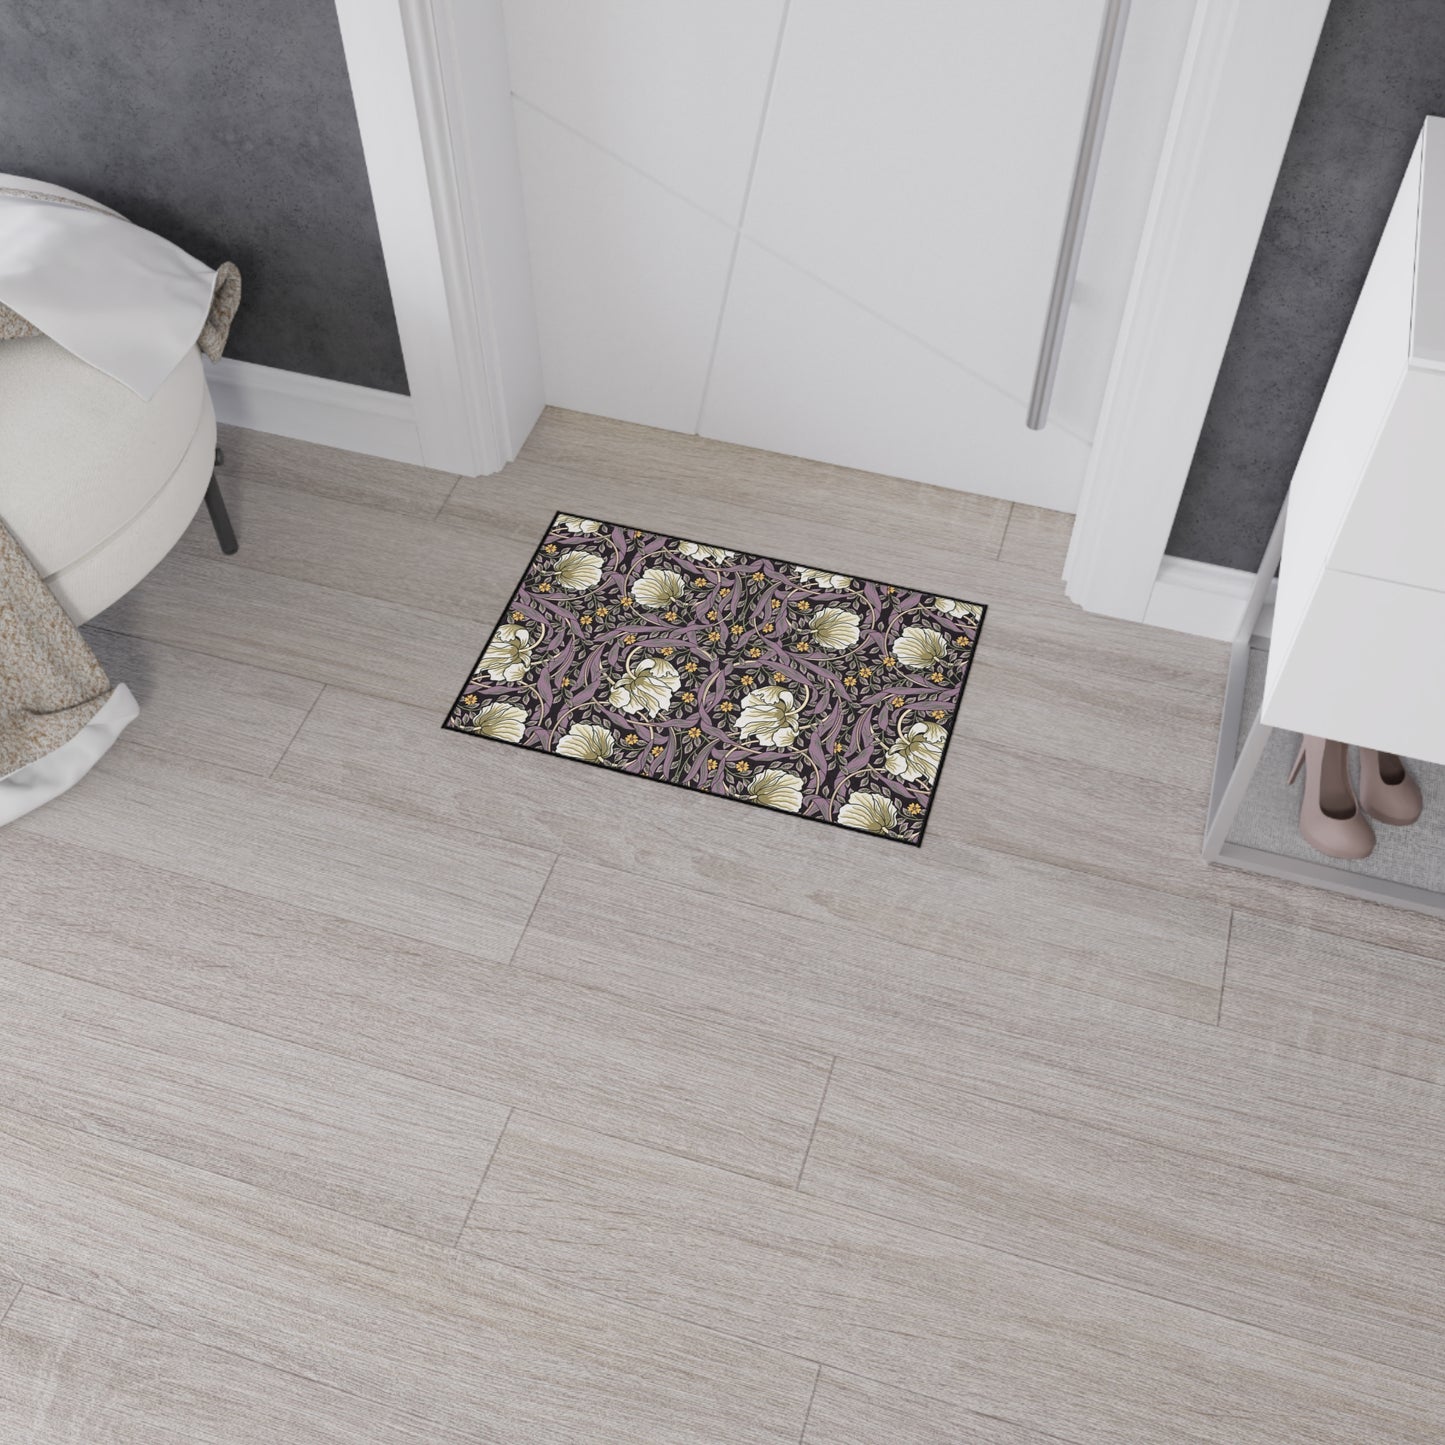 william-morris-co-heavy-duty-floor-mat-floor-mat-pimpernel-collection-rosewood-25